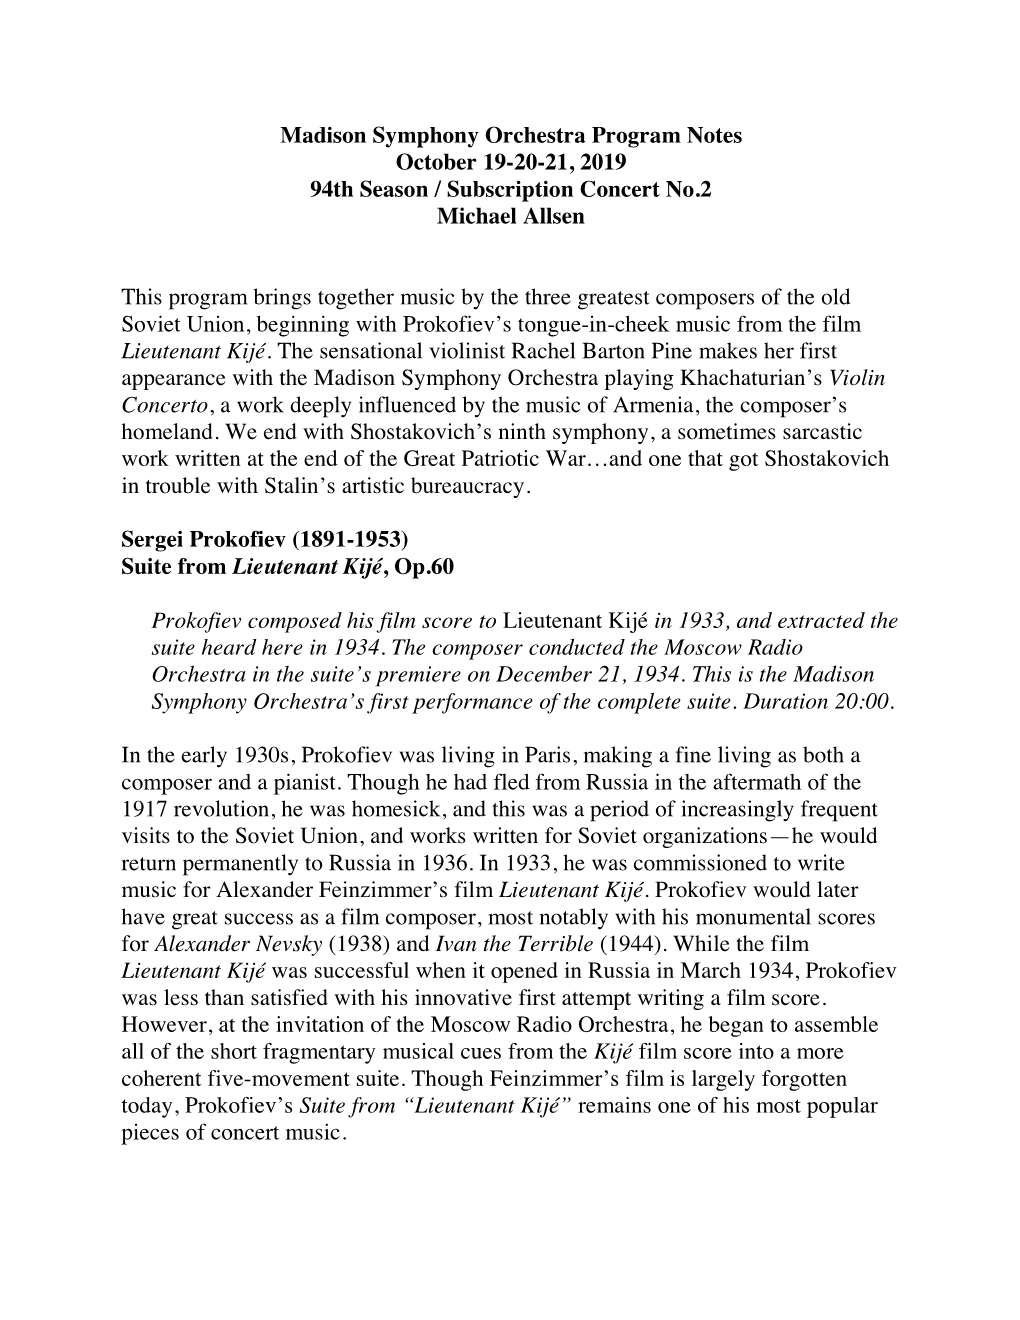 Madison Symphony Orchestra Program Notes October 19-20-21, 2019 94Th Season / Subscription Concert No.2 Michael Allsen